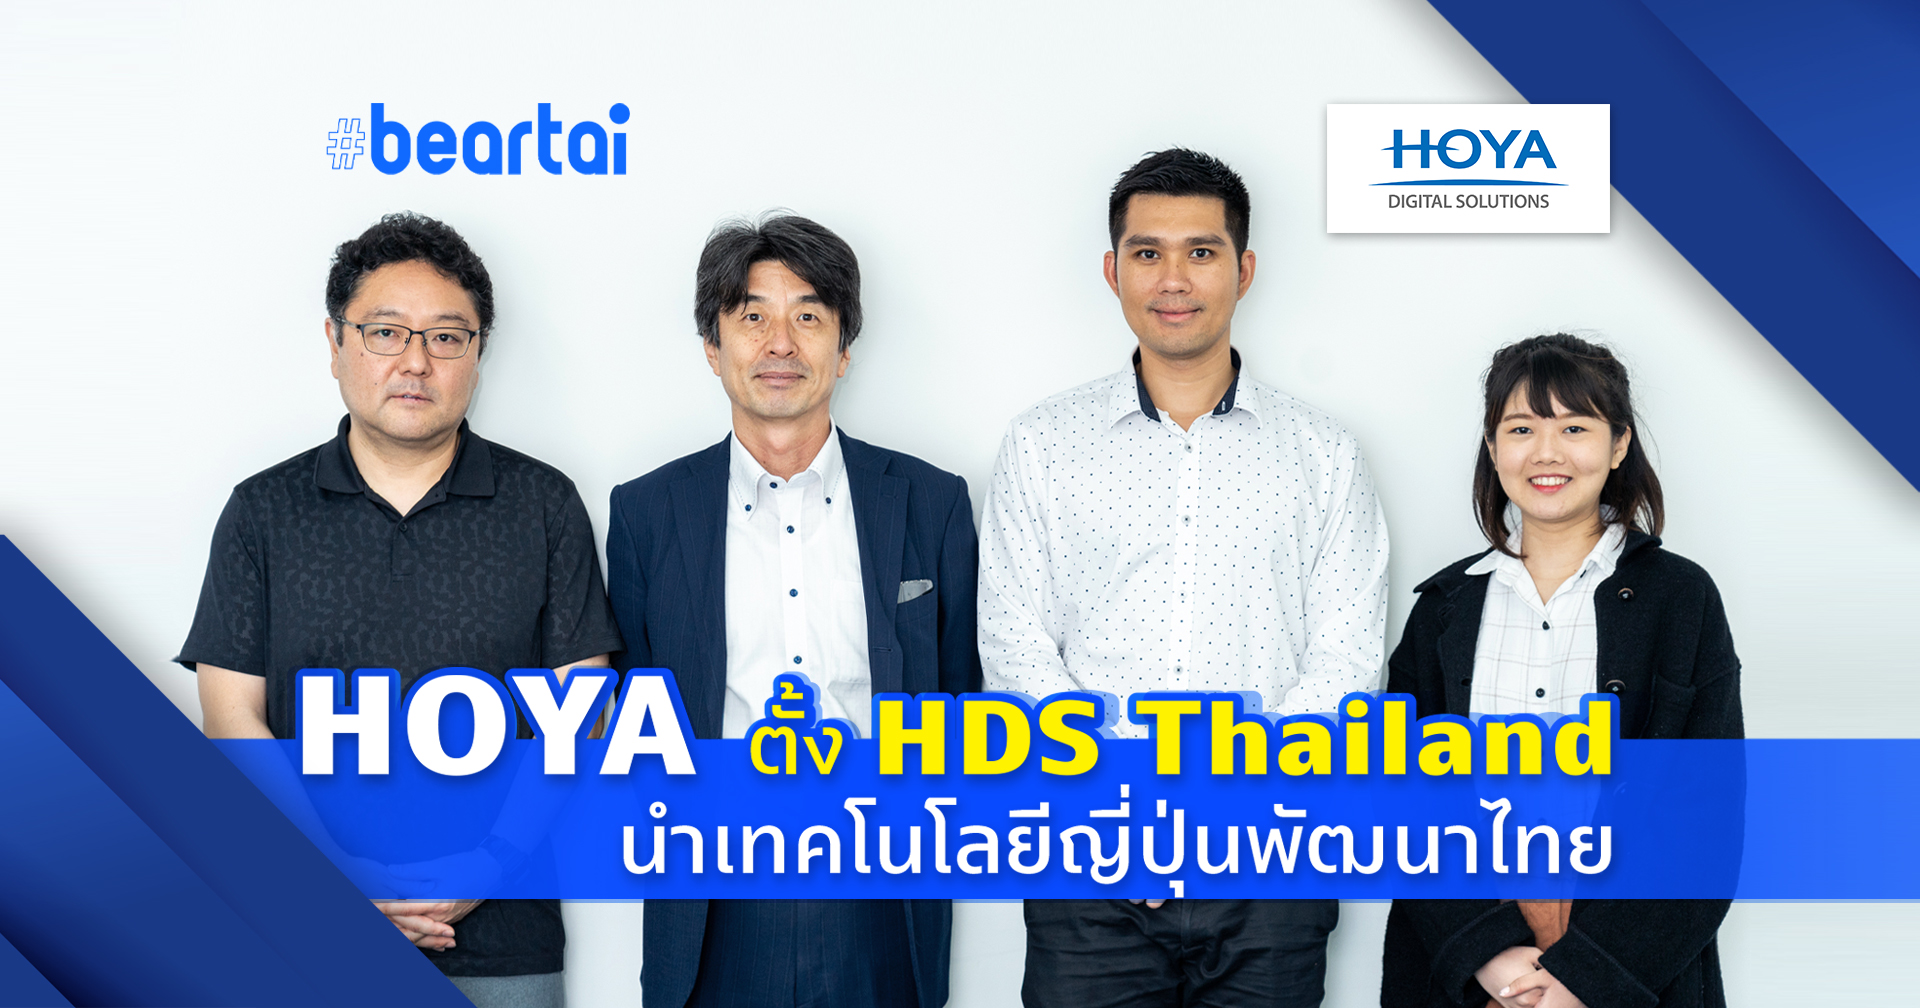 HOYA มั่นใจเศรษฐกิจไทย รุกตั้งบริษัท HDS Thailand นำเทคโนโลยีล่าสุดจากญี่ปุ่นพัฒนาอุตสาหกรรมไทยในยุคโควิด